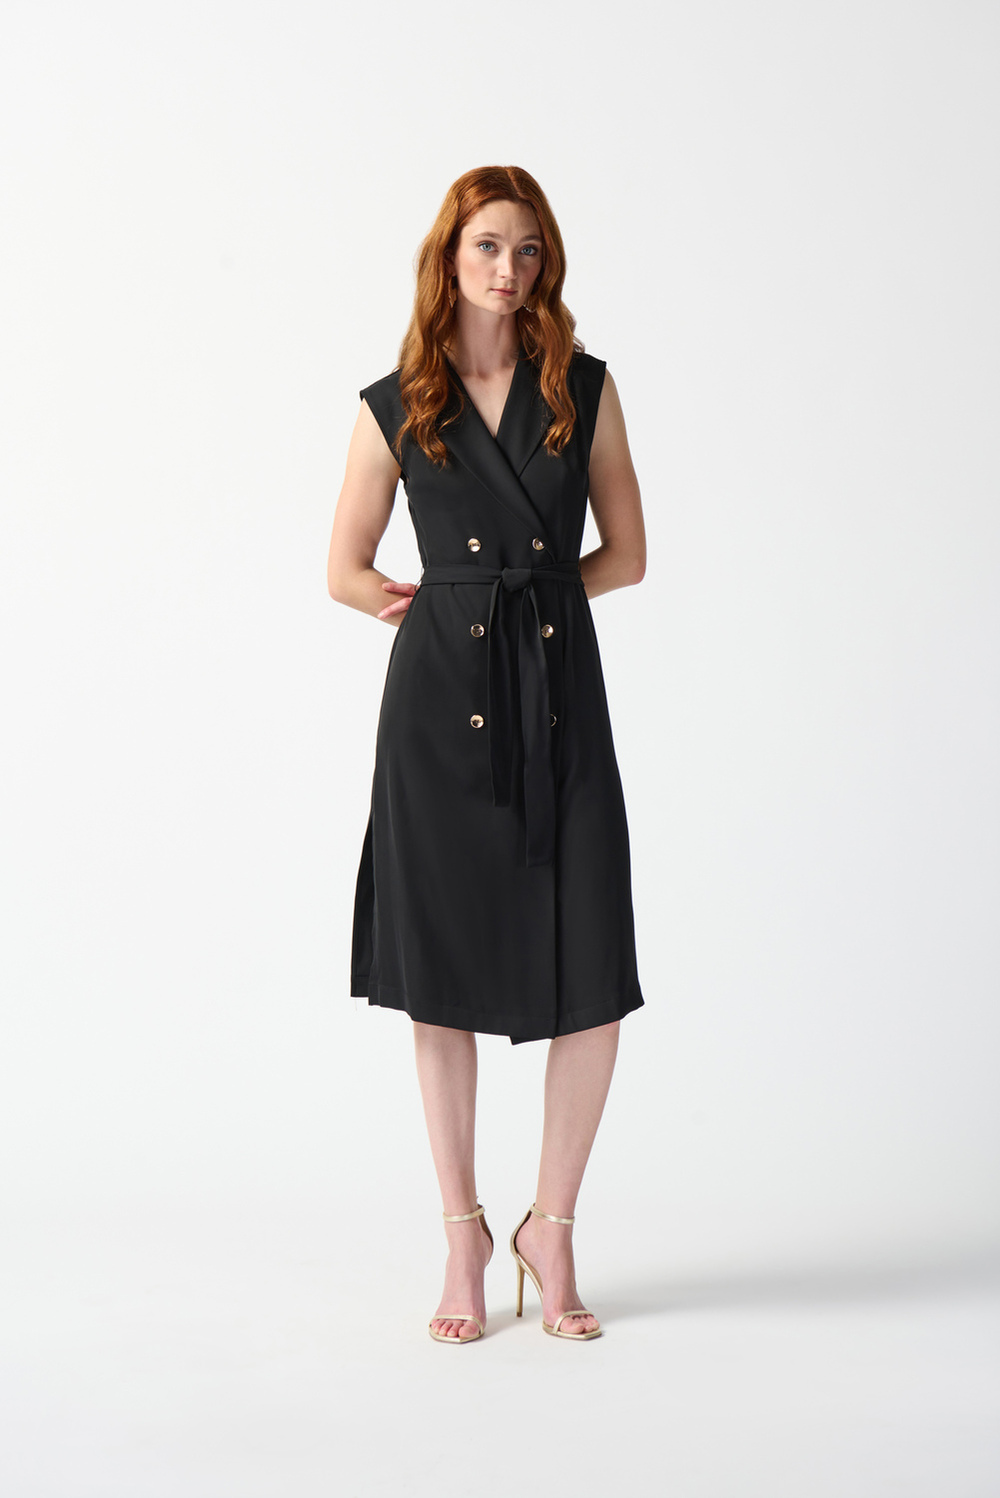 Double-Breasted Sleeveless Dress Style 242075. Black